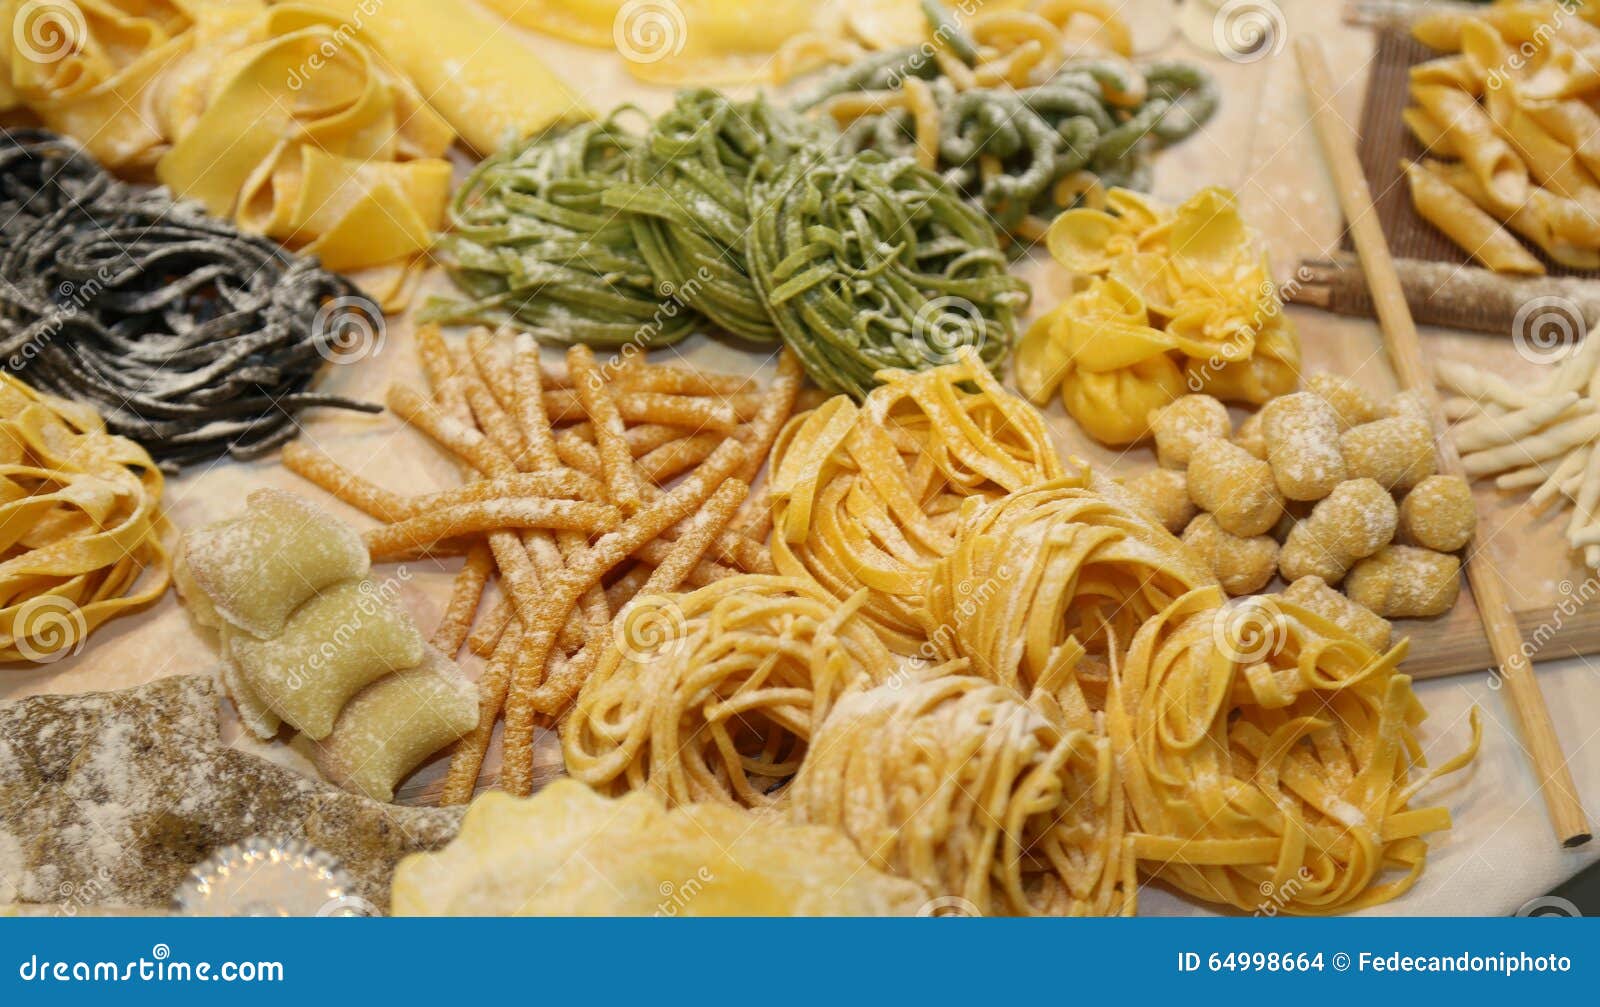 italian spaghetti homemade and other size fresh pasta